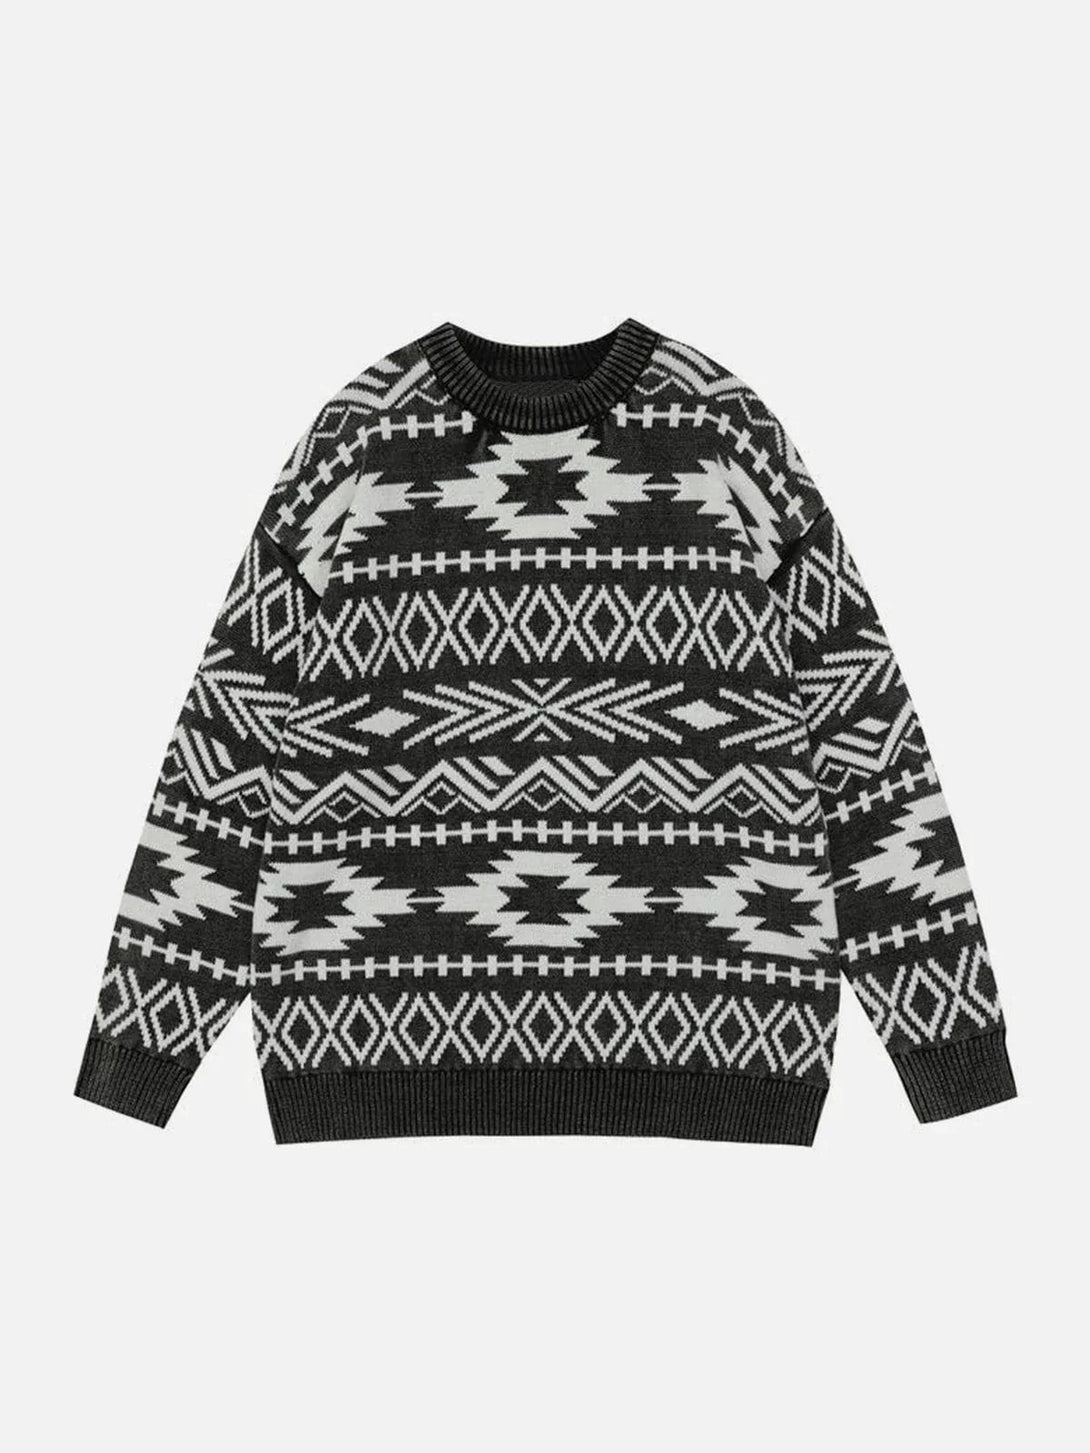 Majesda® - Vintage Geometric Graphic Sweater outfit ideas streetwear fashion